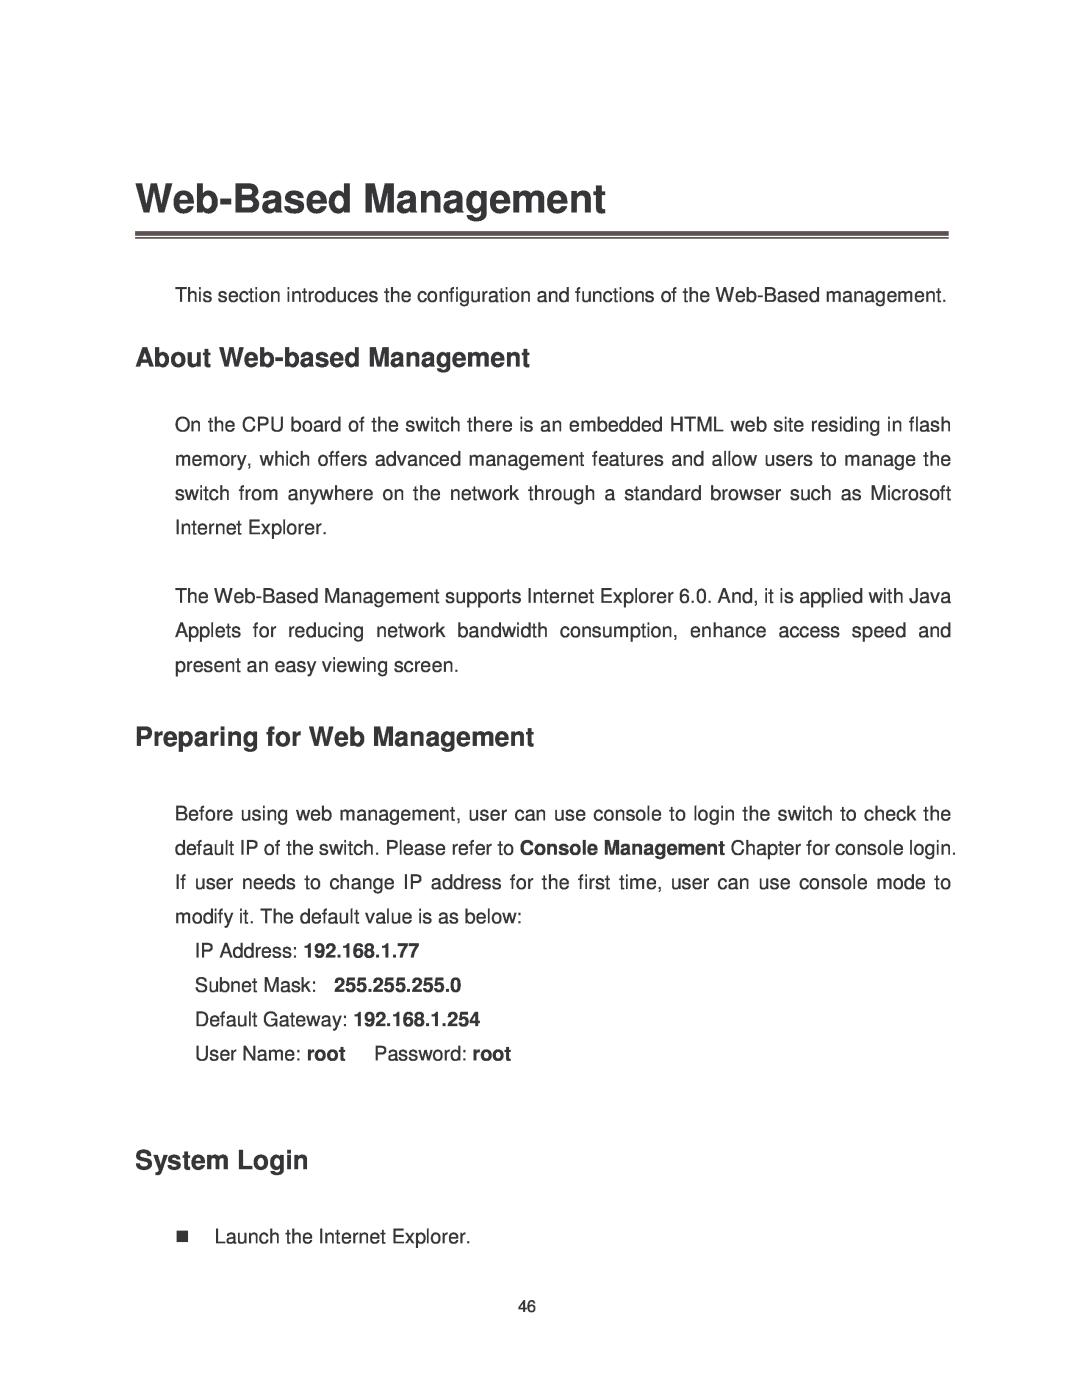 Transition Networks Web-Based Management, About Web-based Management, Preparing for Web Management, System Login 